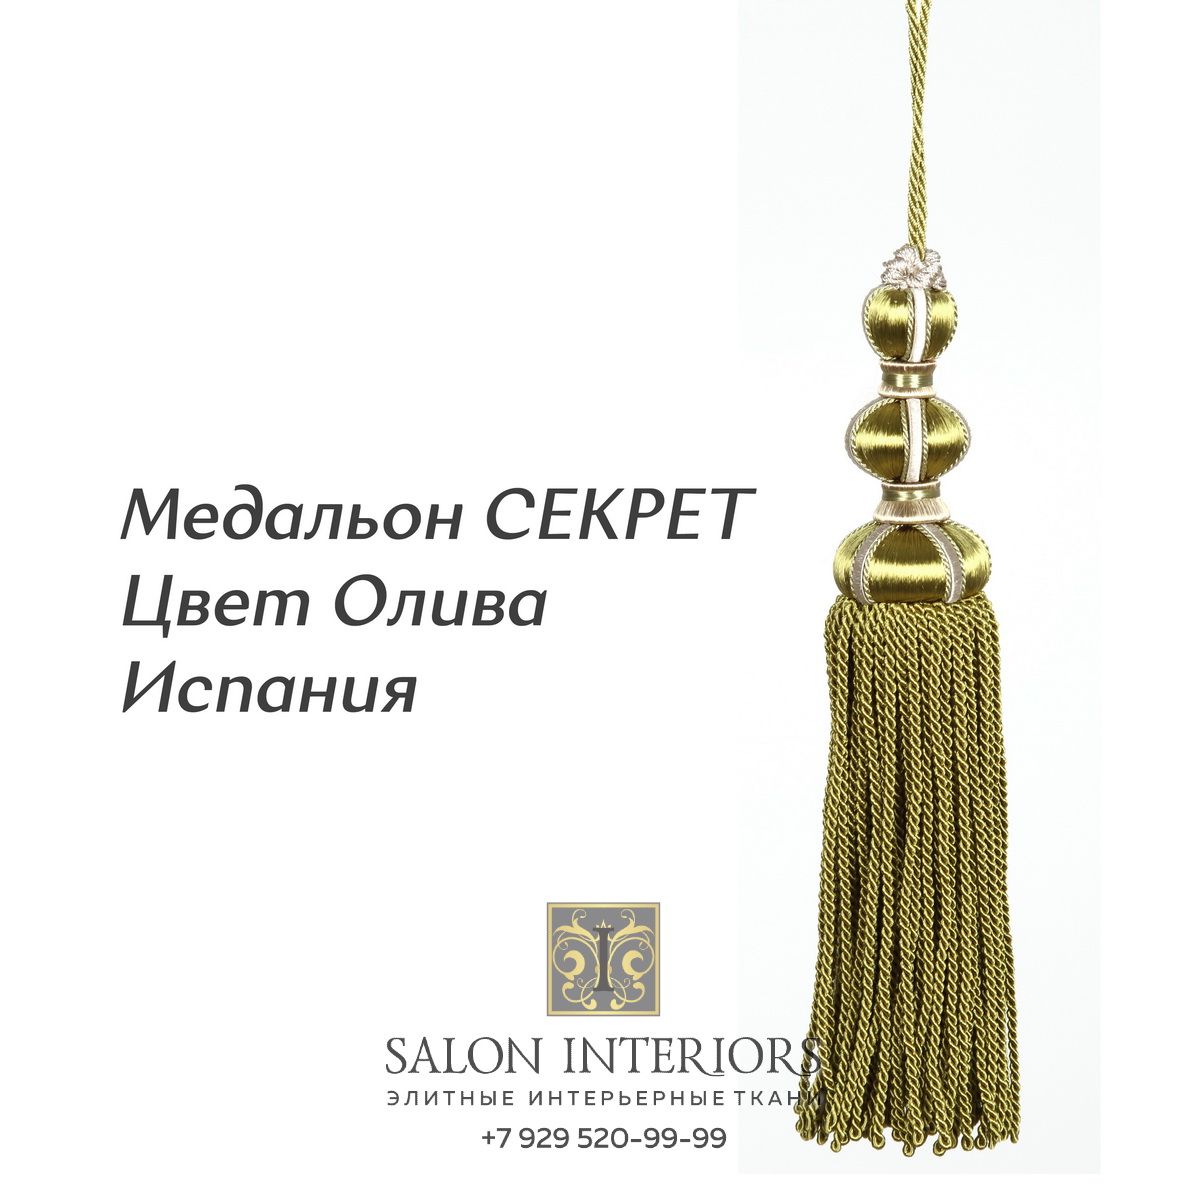 Медальон "СЕКРЕТ" Арт MK996A-1270 Цвет Олива разм.27см Испания